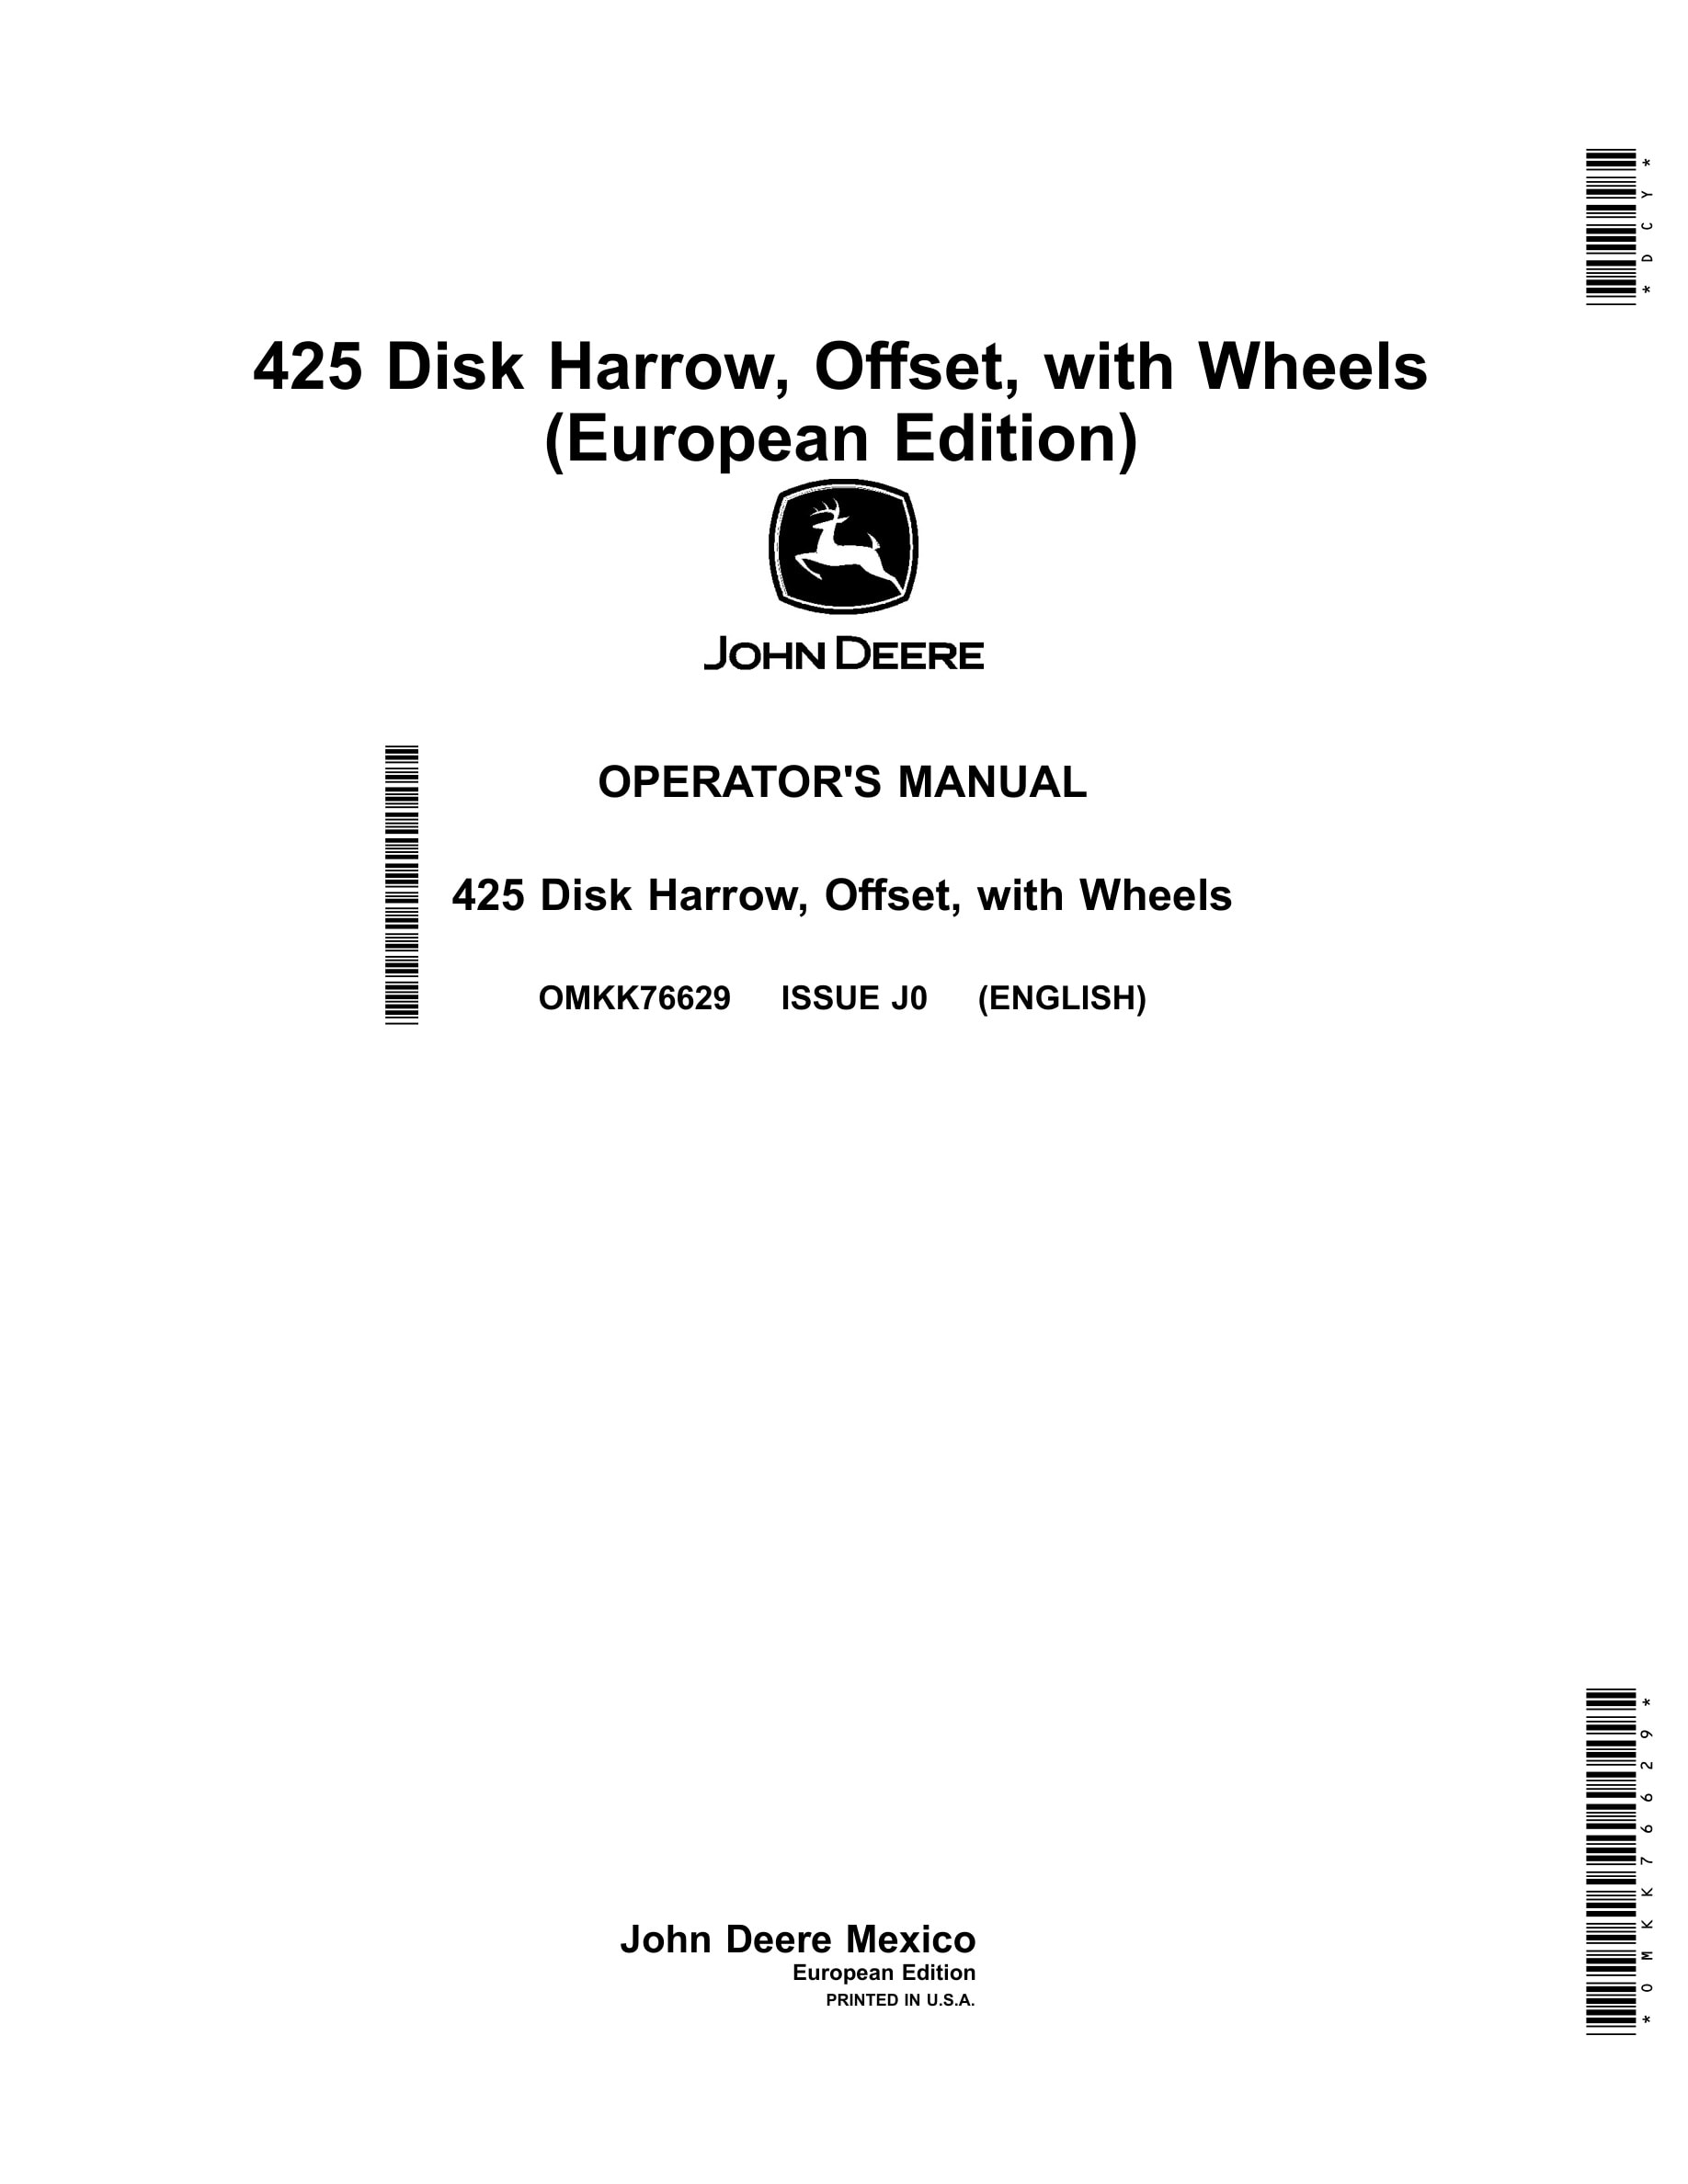 John Deere 425 Disk Harrow Wheel Type Offset Operator Manual OMKK76629-1